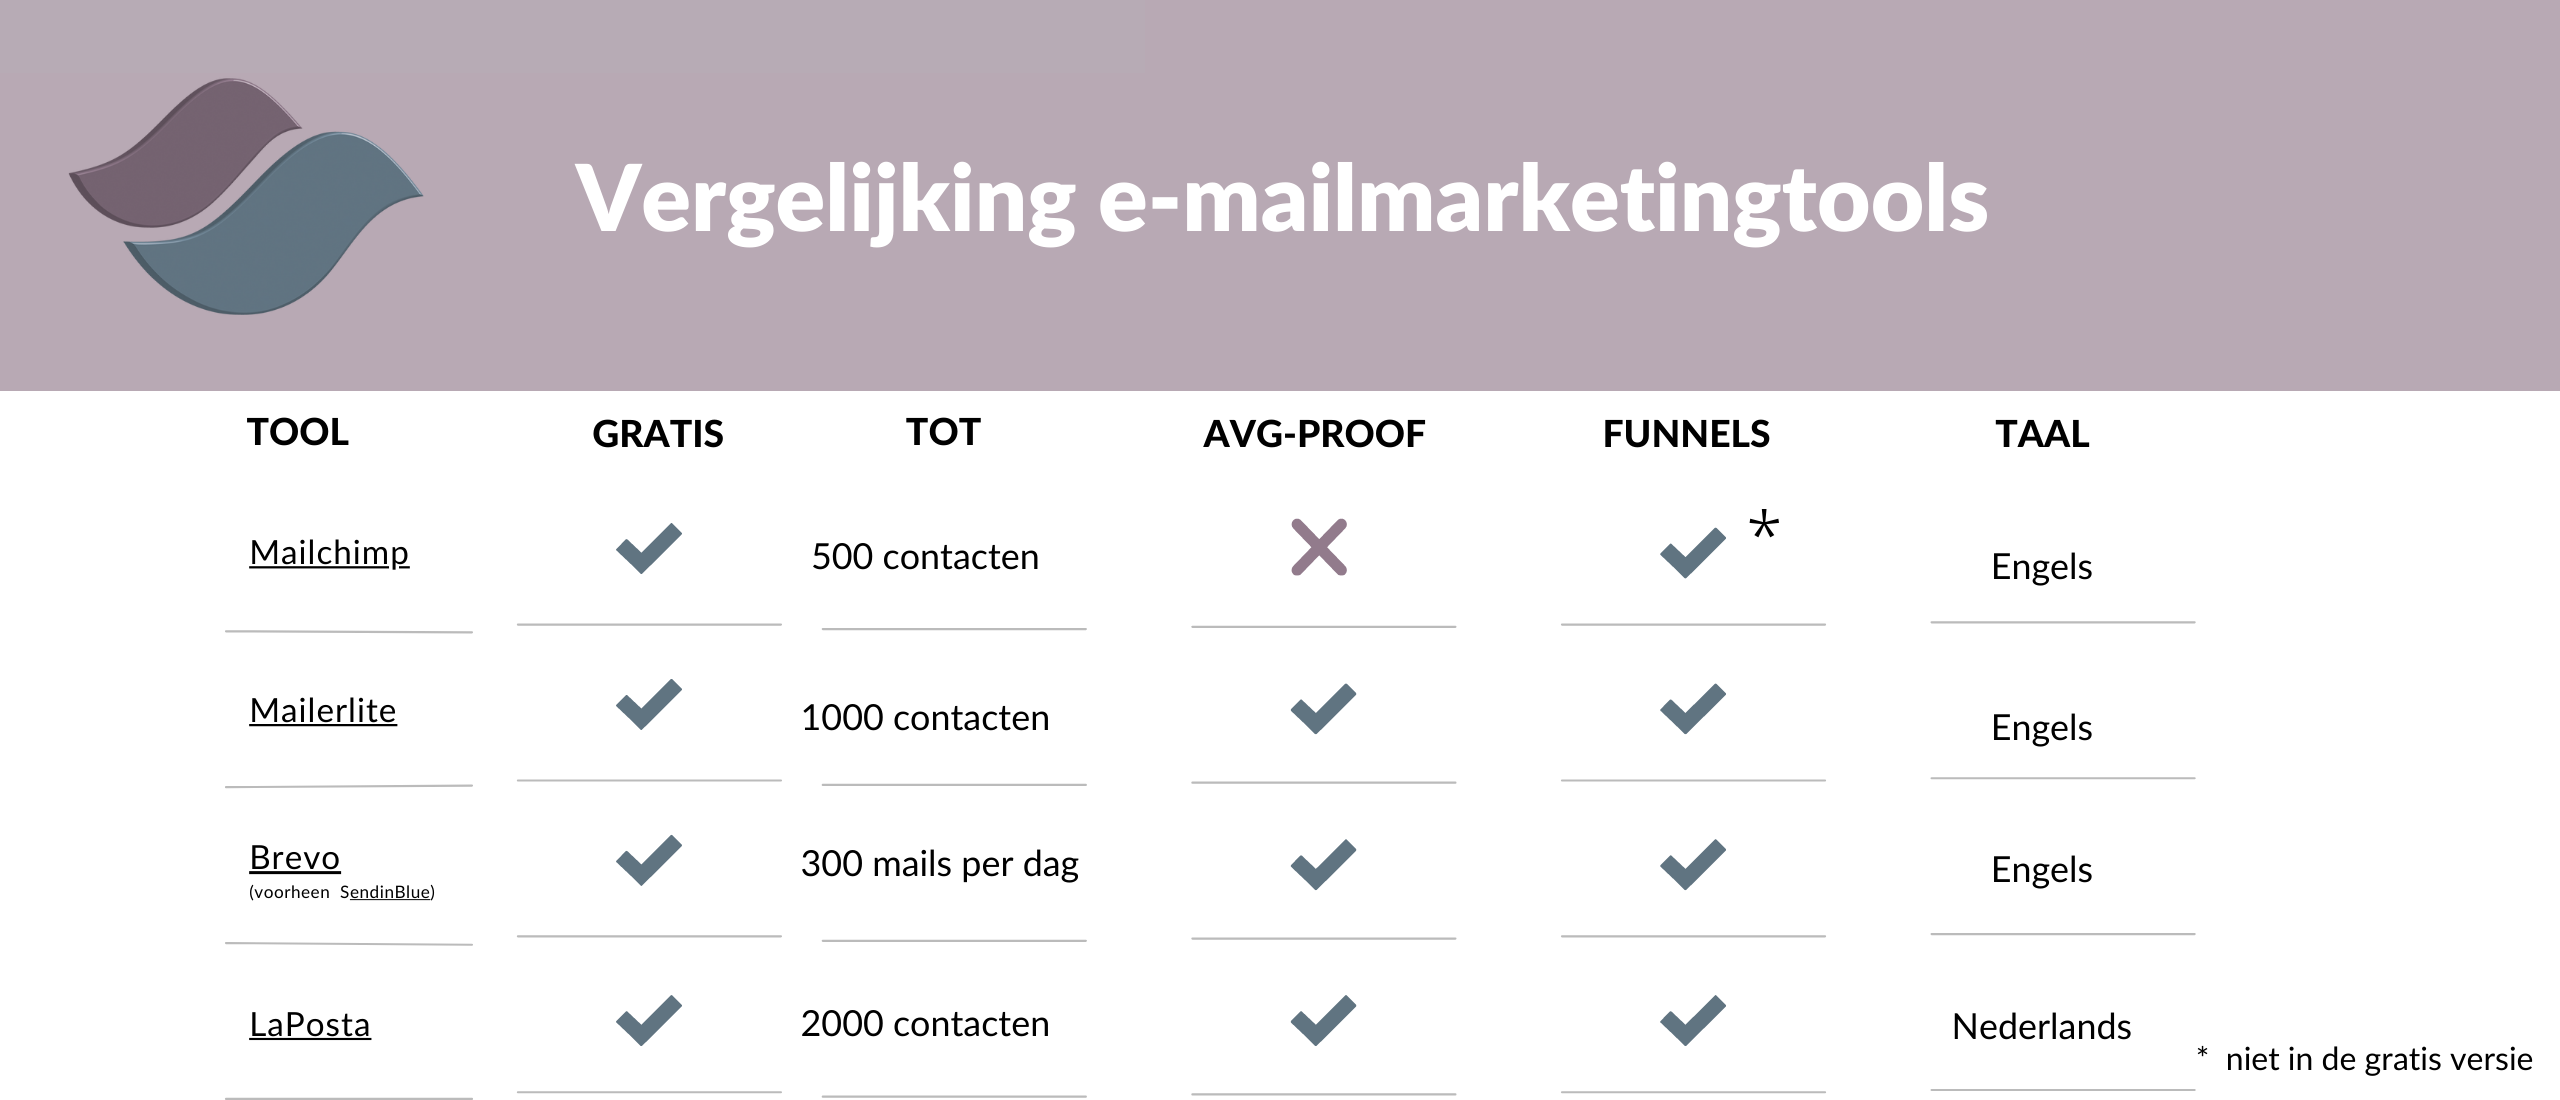 Vergelijking e-mailmarketingtools